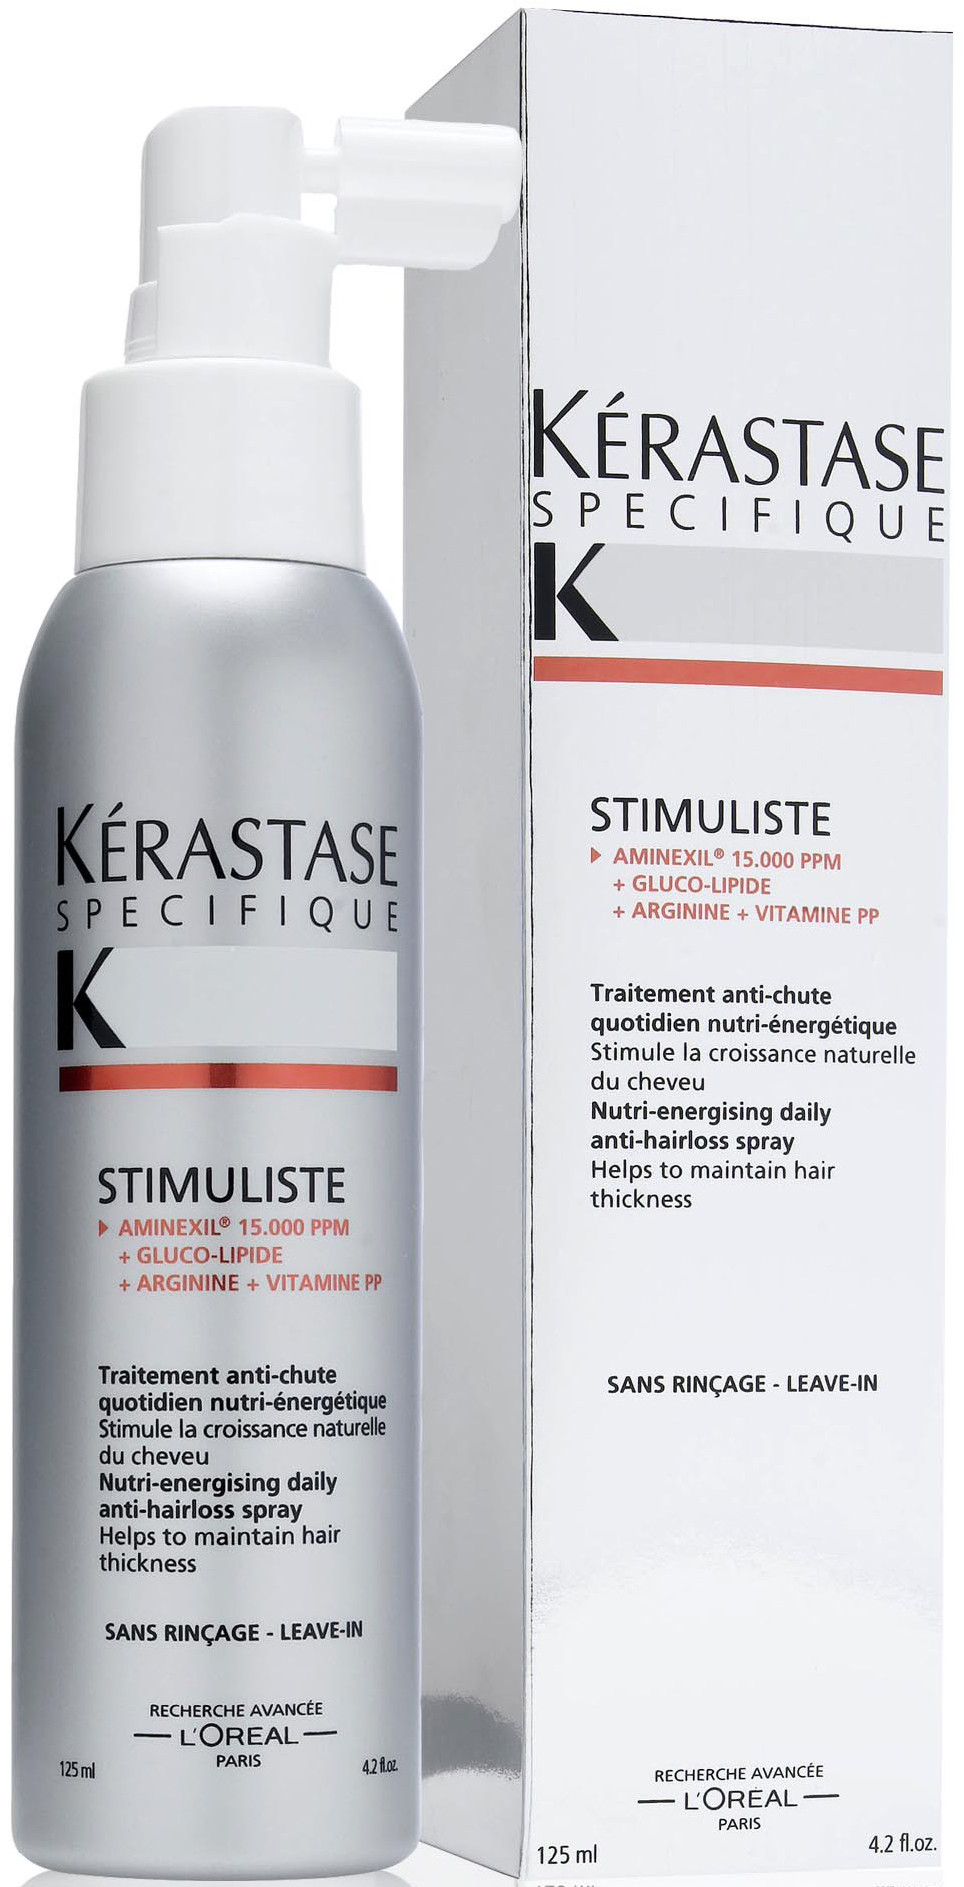 Kérastase Specifique Stimuliste behandeling tegen haarverlies - 125 ml